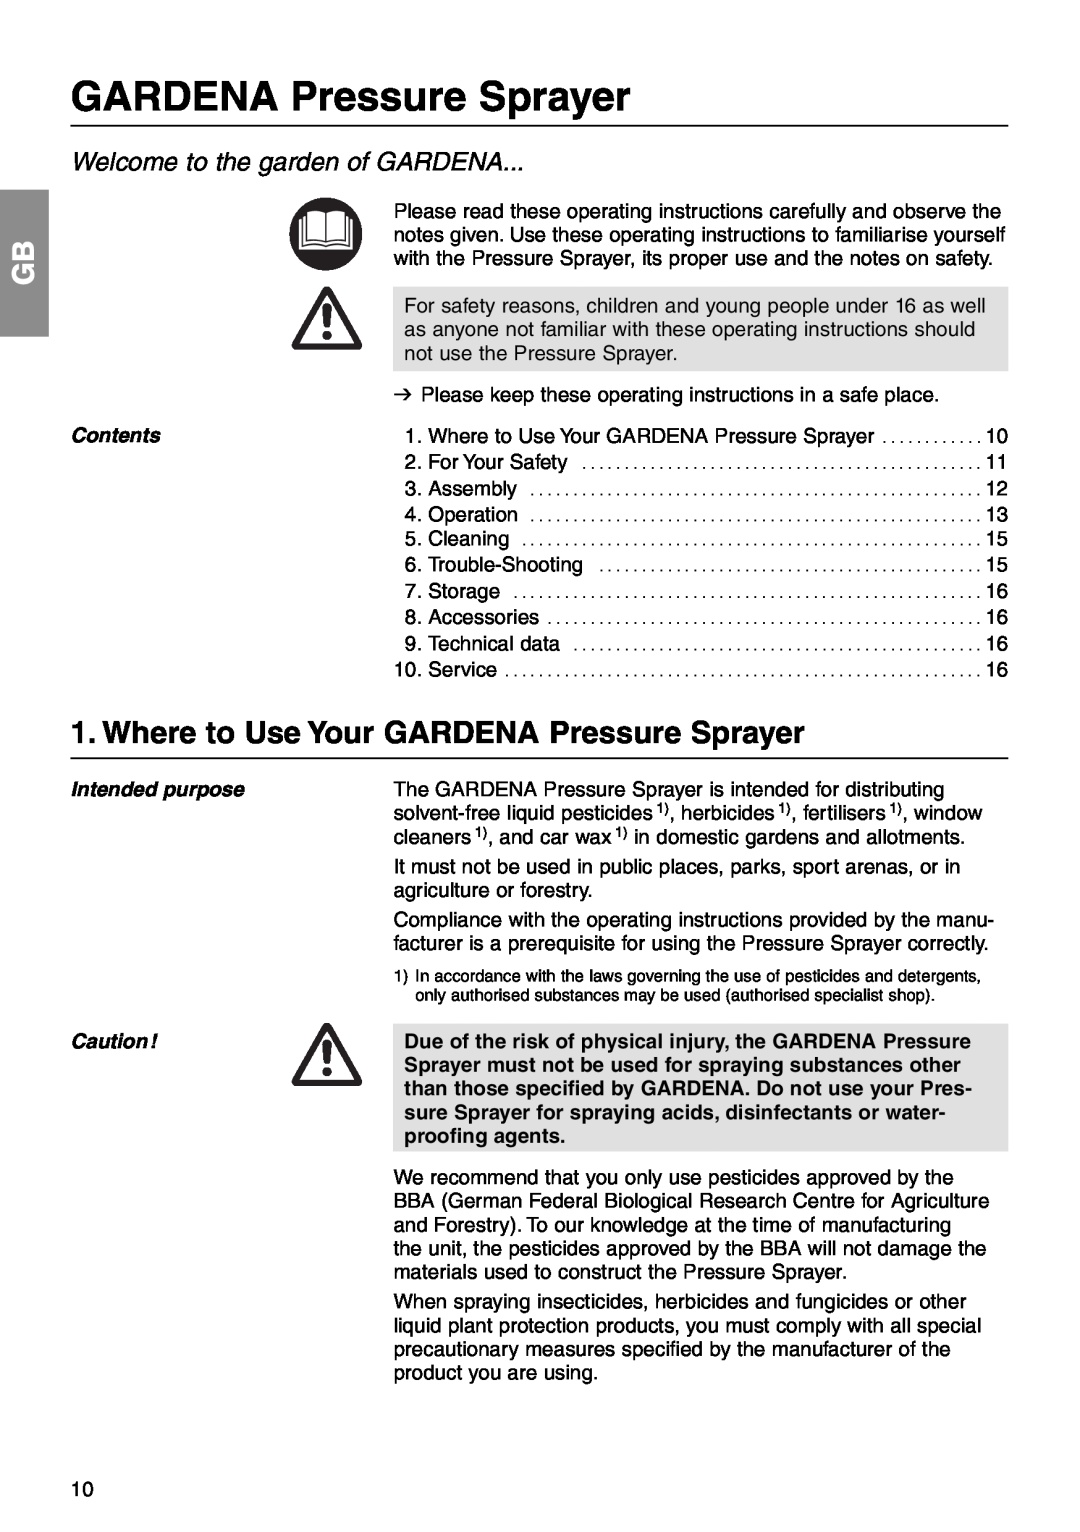 Gardena Art. 867 Where to Use Your GARDENA Pressure Sprayer, Welcome to the garden of GARDENA, Contents, Intended purpose 